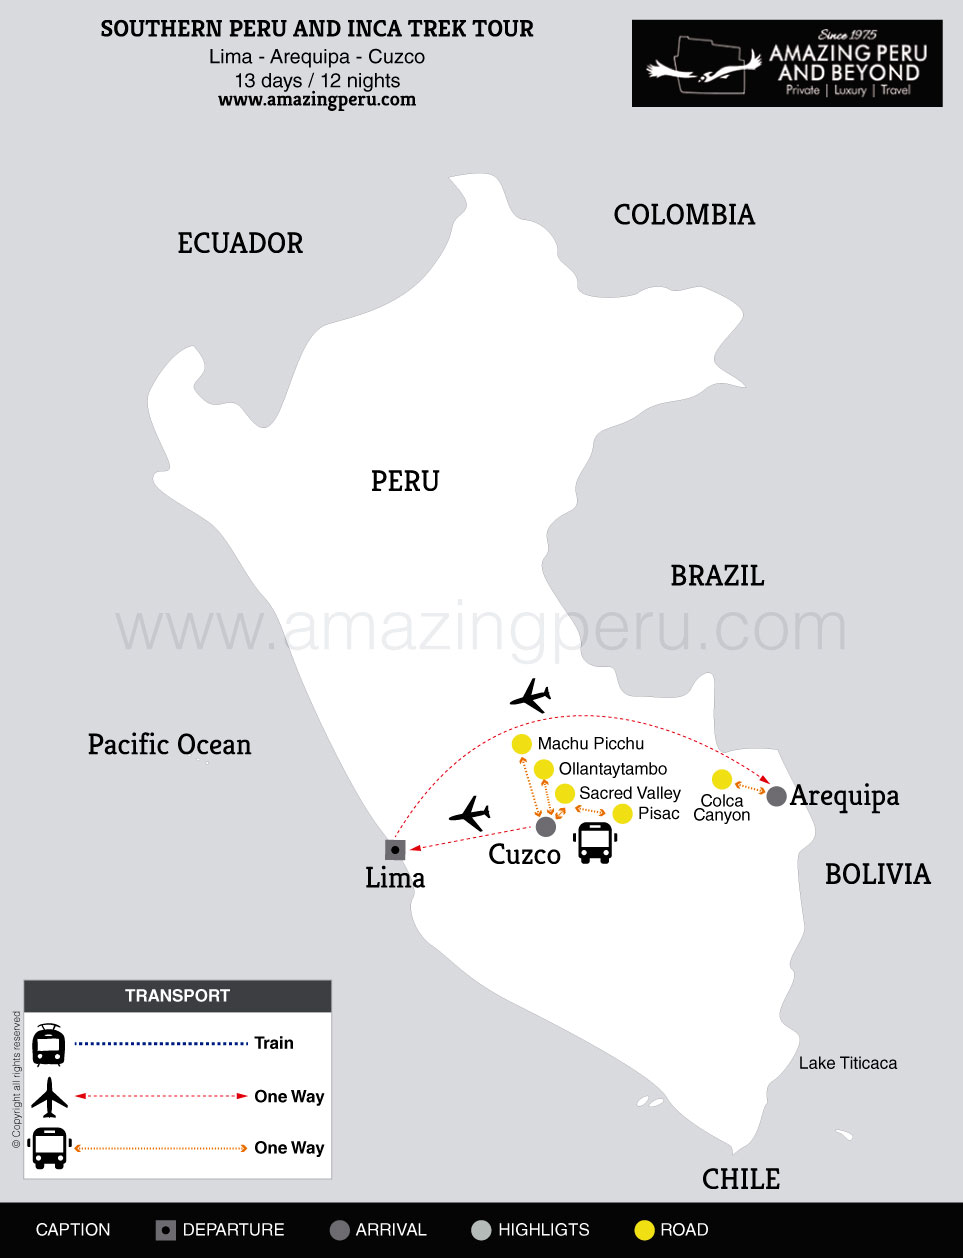 2022 Southern Peru and Inca Trek Tour - 13 days / 12 nights.